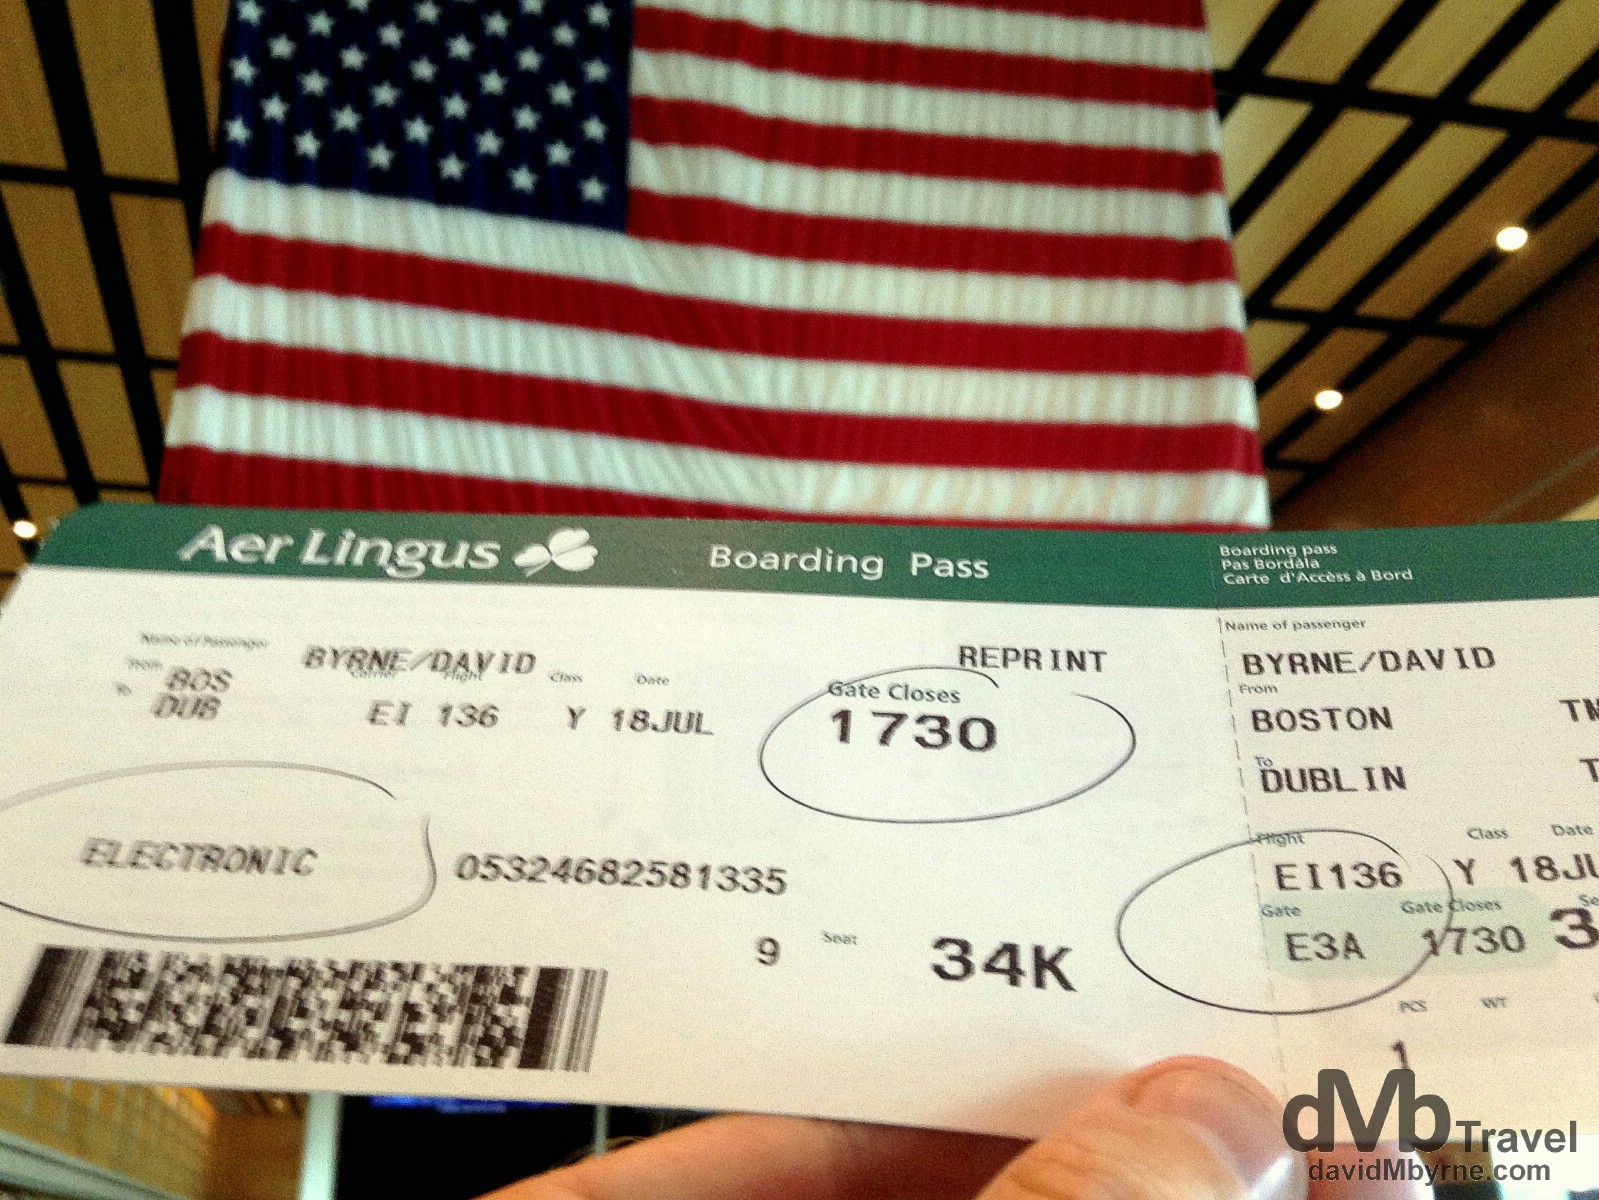 Homeward bound. Logan International Airport, Boston, Massachusetts, USA. July 18th 2013.